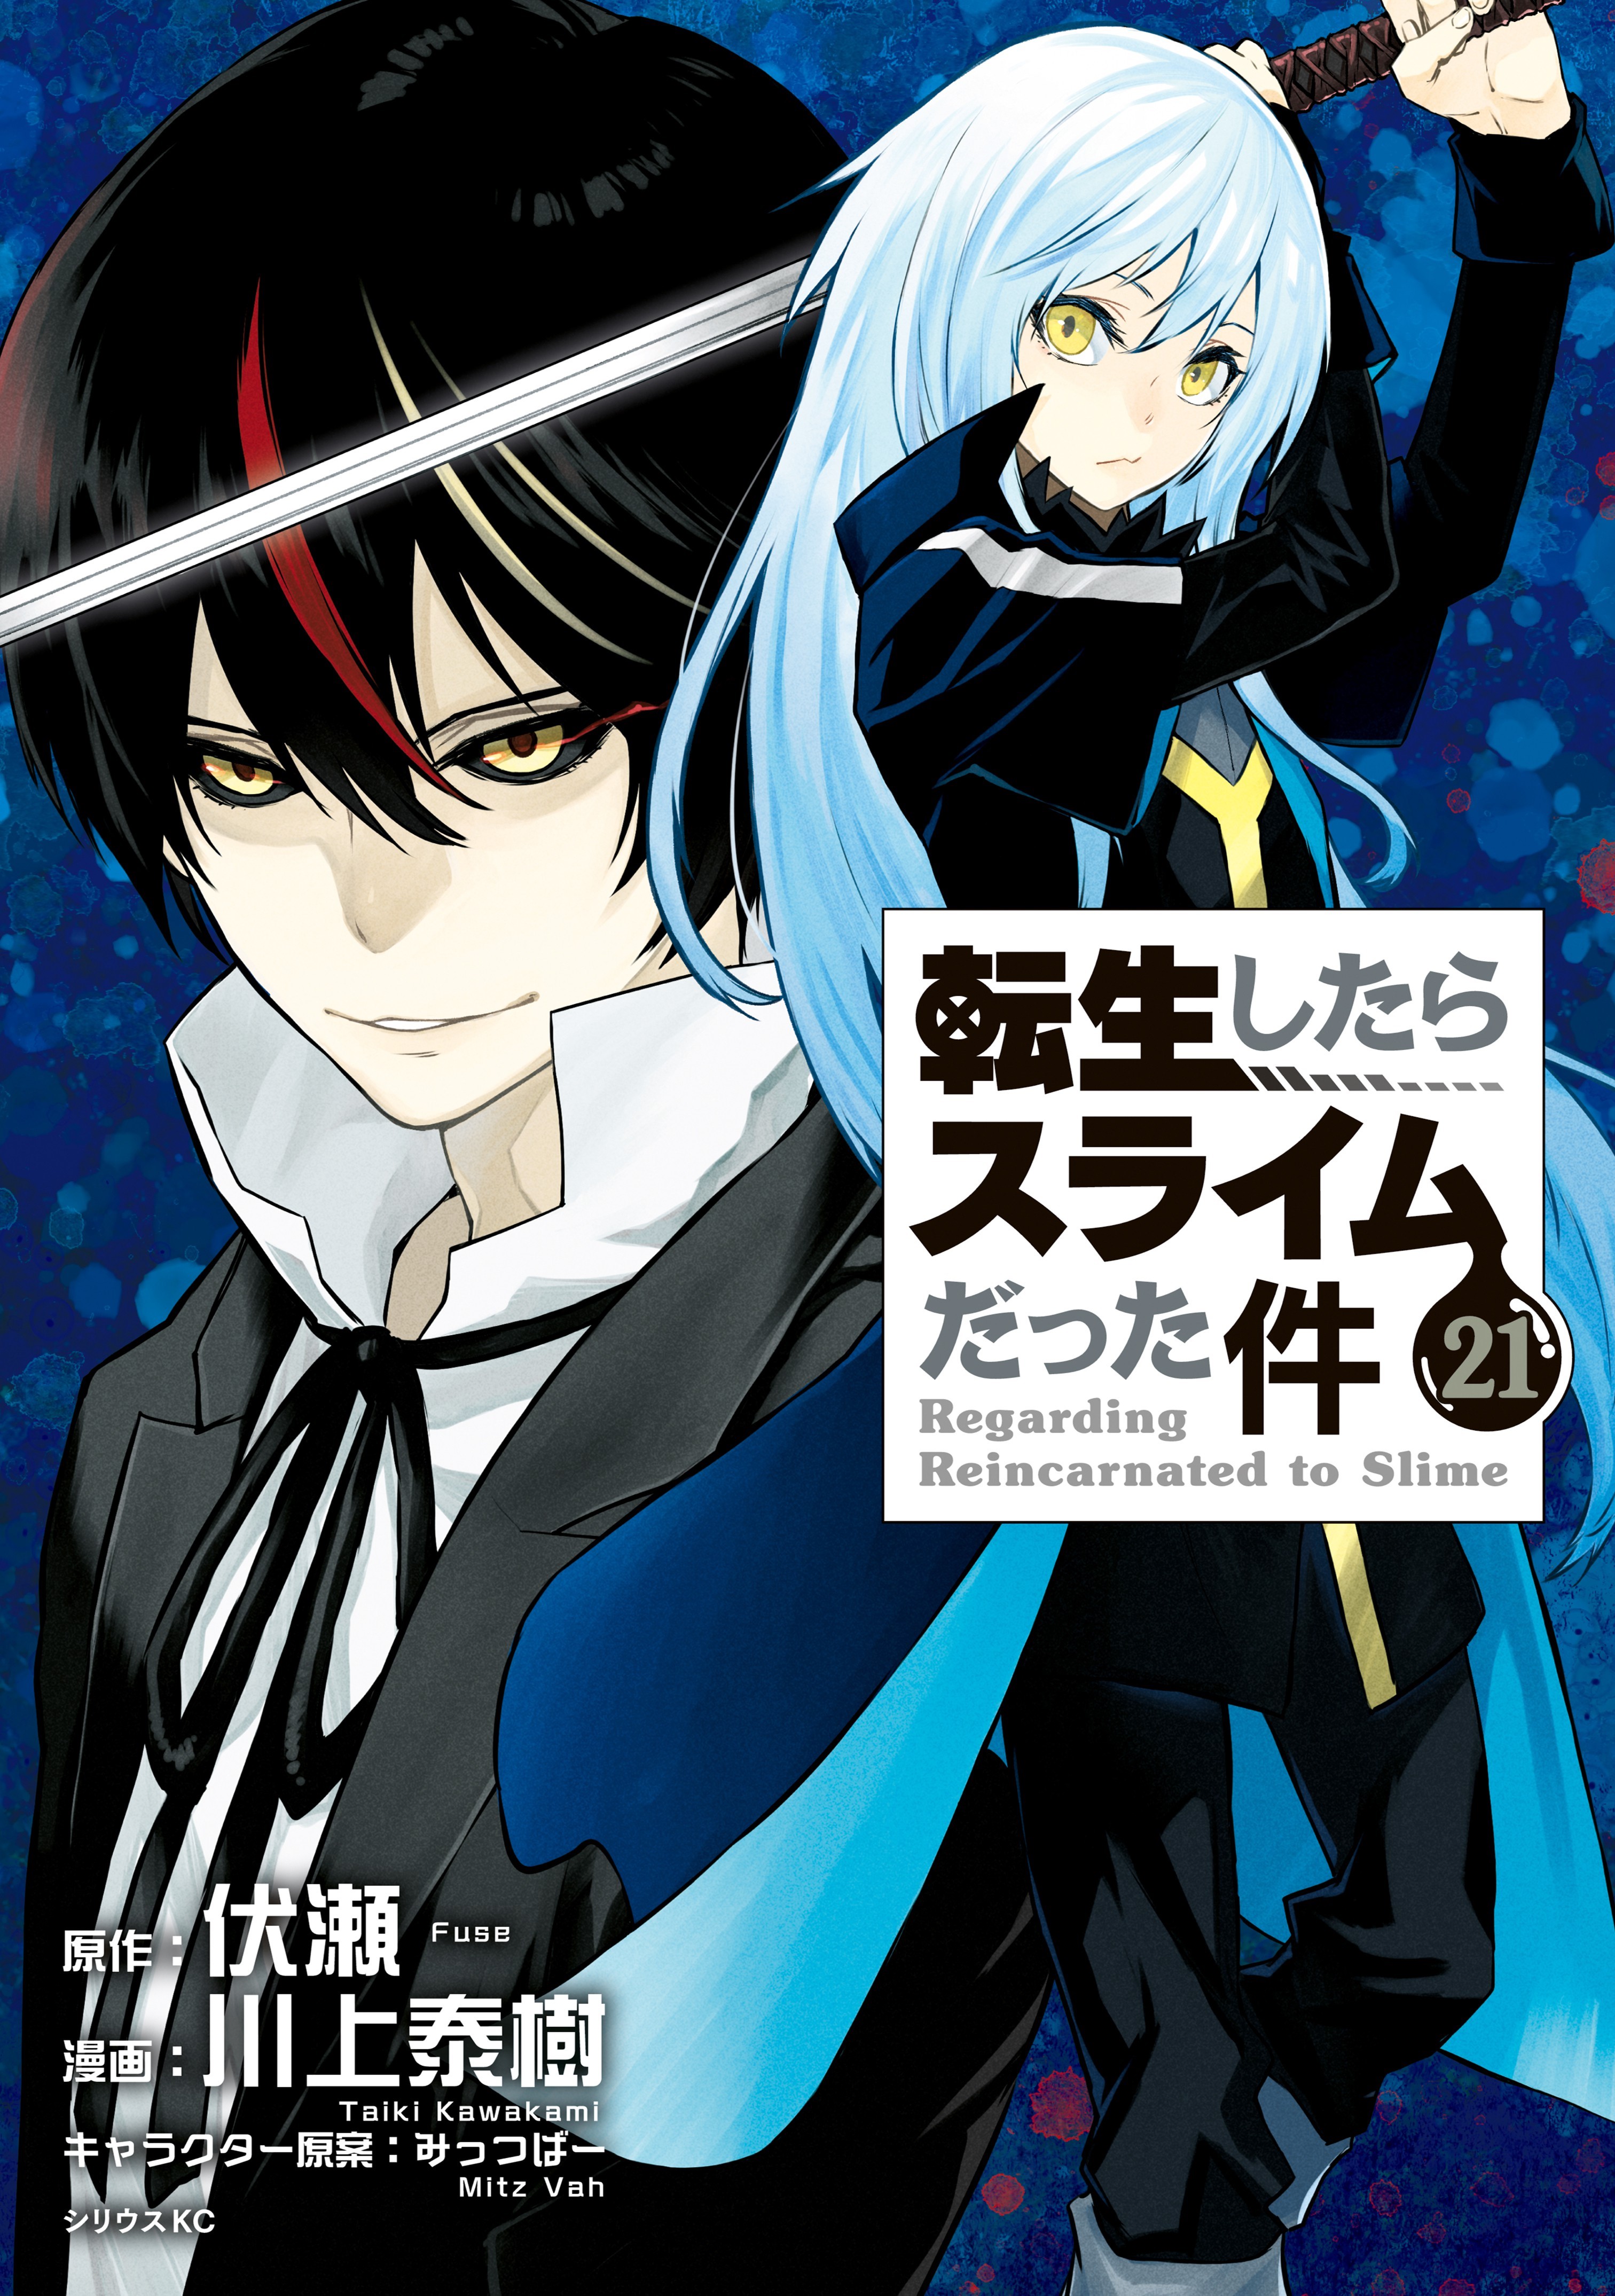 Light Novel Volume 18, Tensei Shitara Slime datta ken Wiki, Fandom